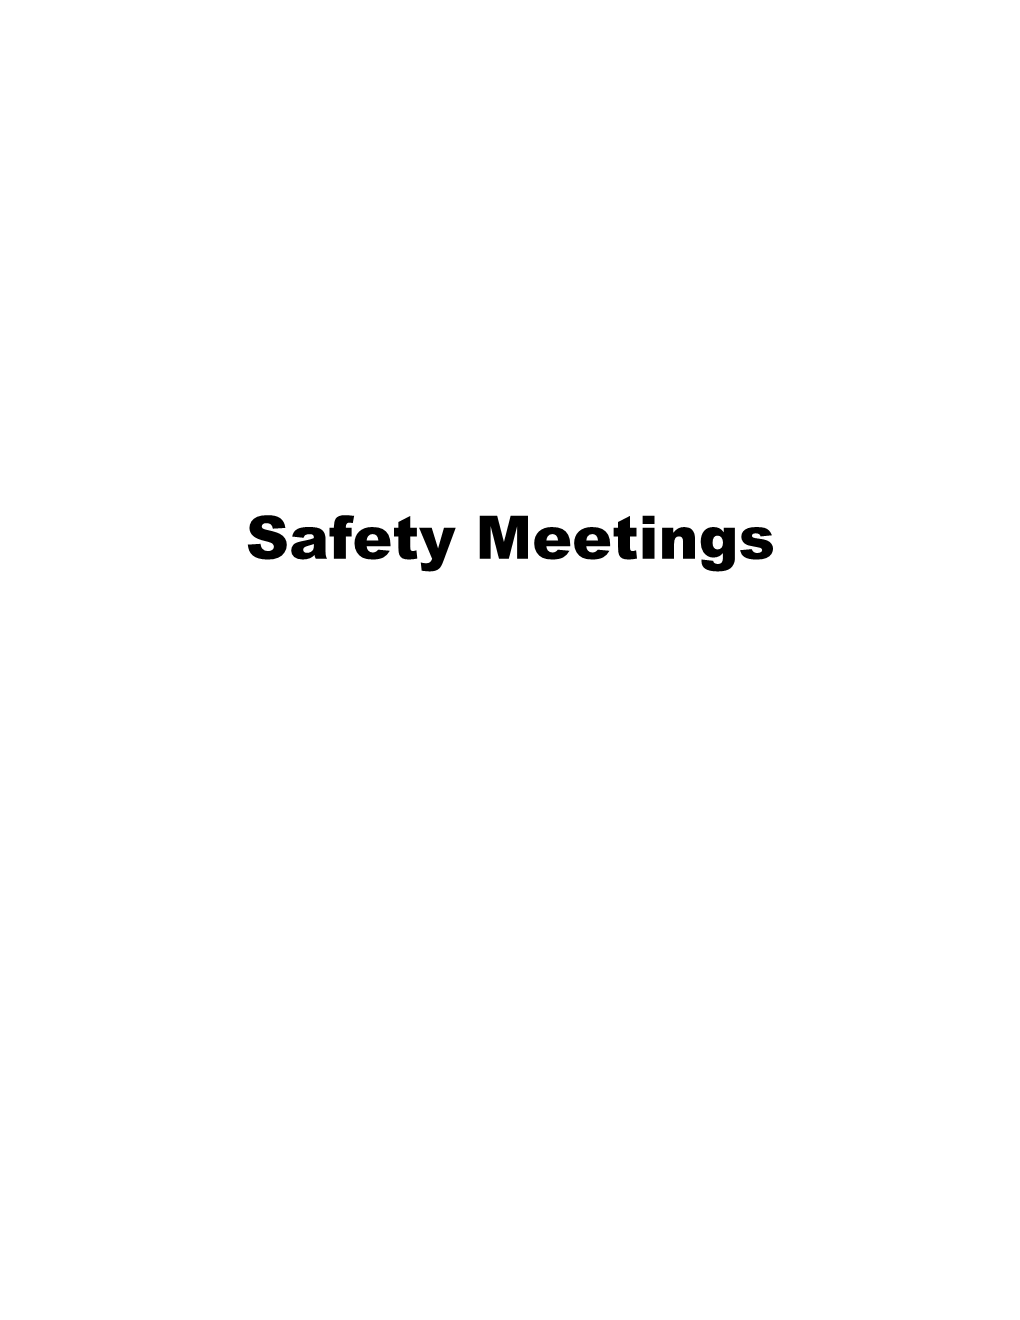 More Fleet Safety Meetings